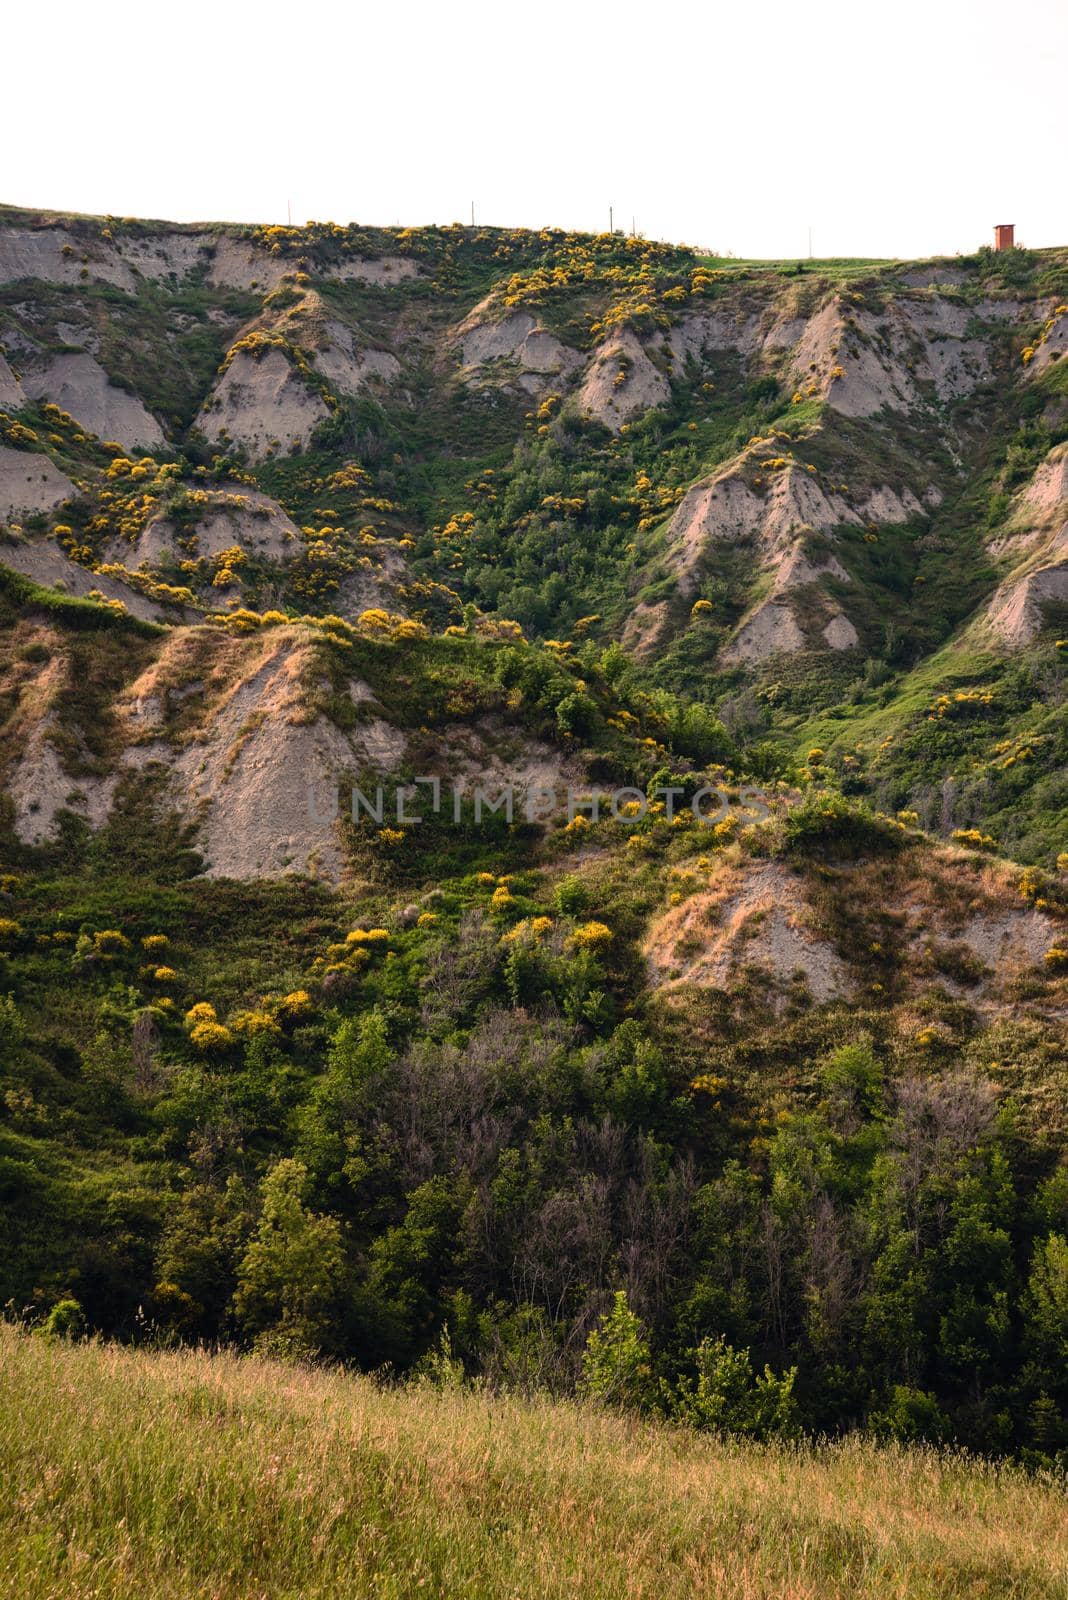 Eroded hills in Montespino, near Pesaro and Urbino in Italy by MaxalTamor